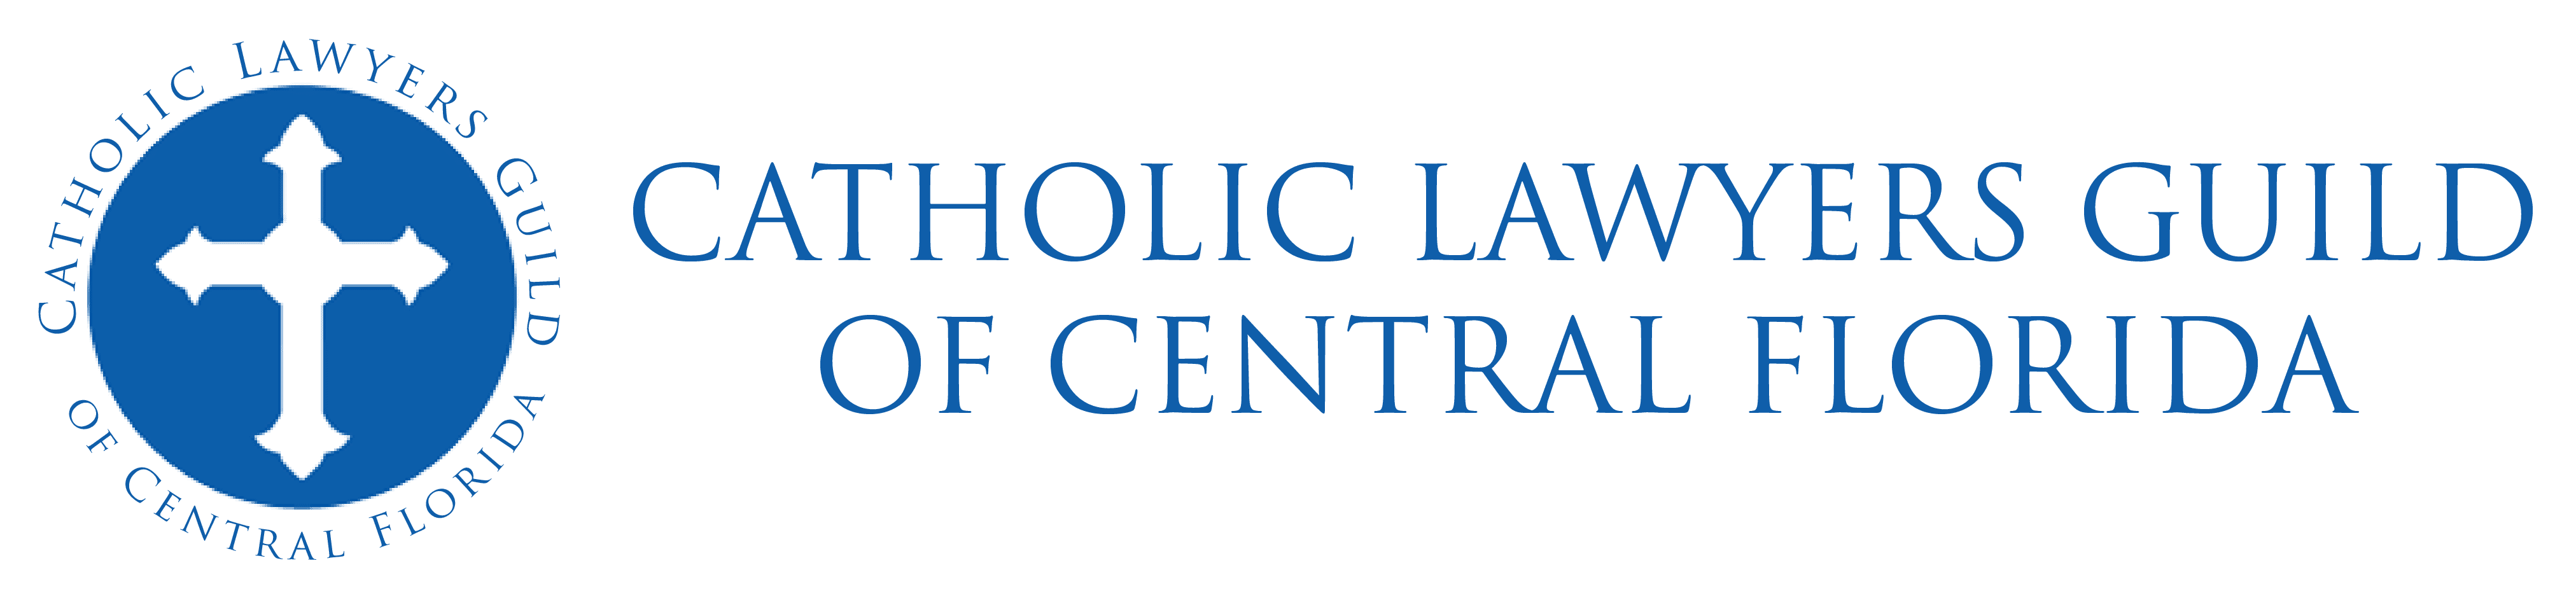 Catholic Lawyers Guild of Central Florida